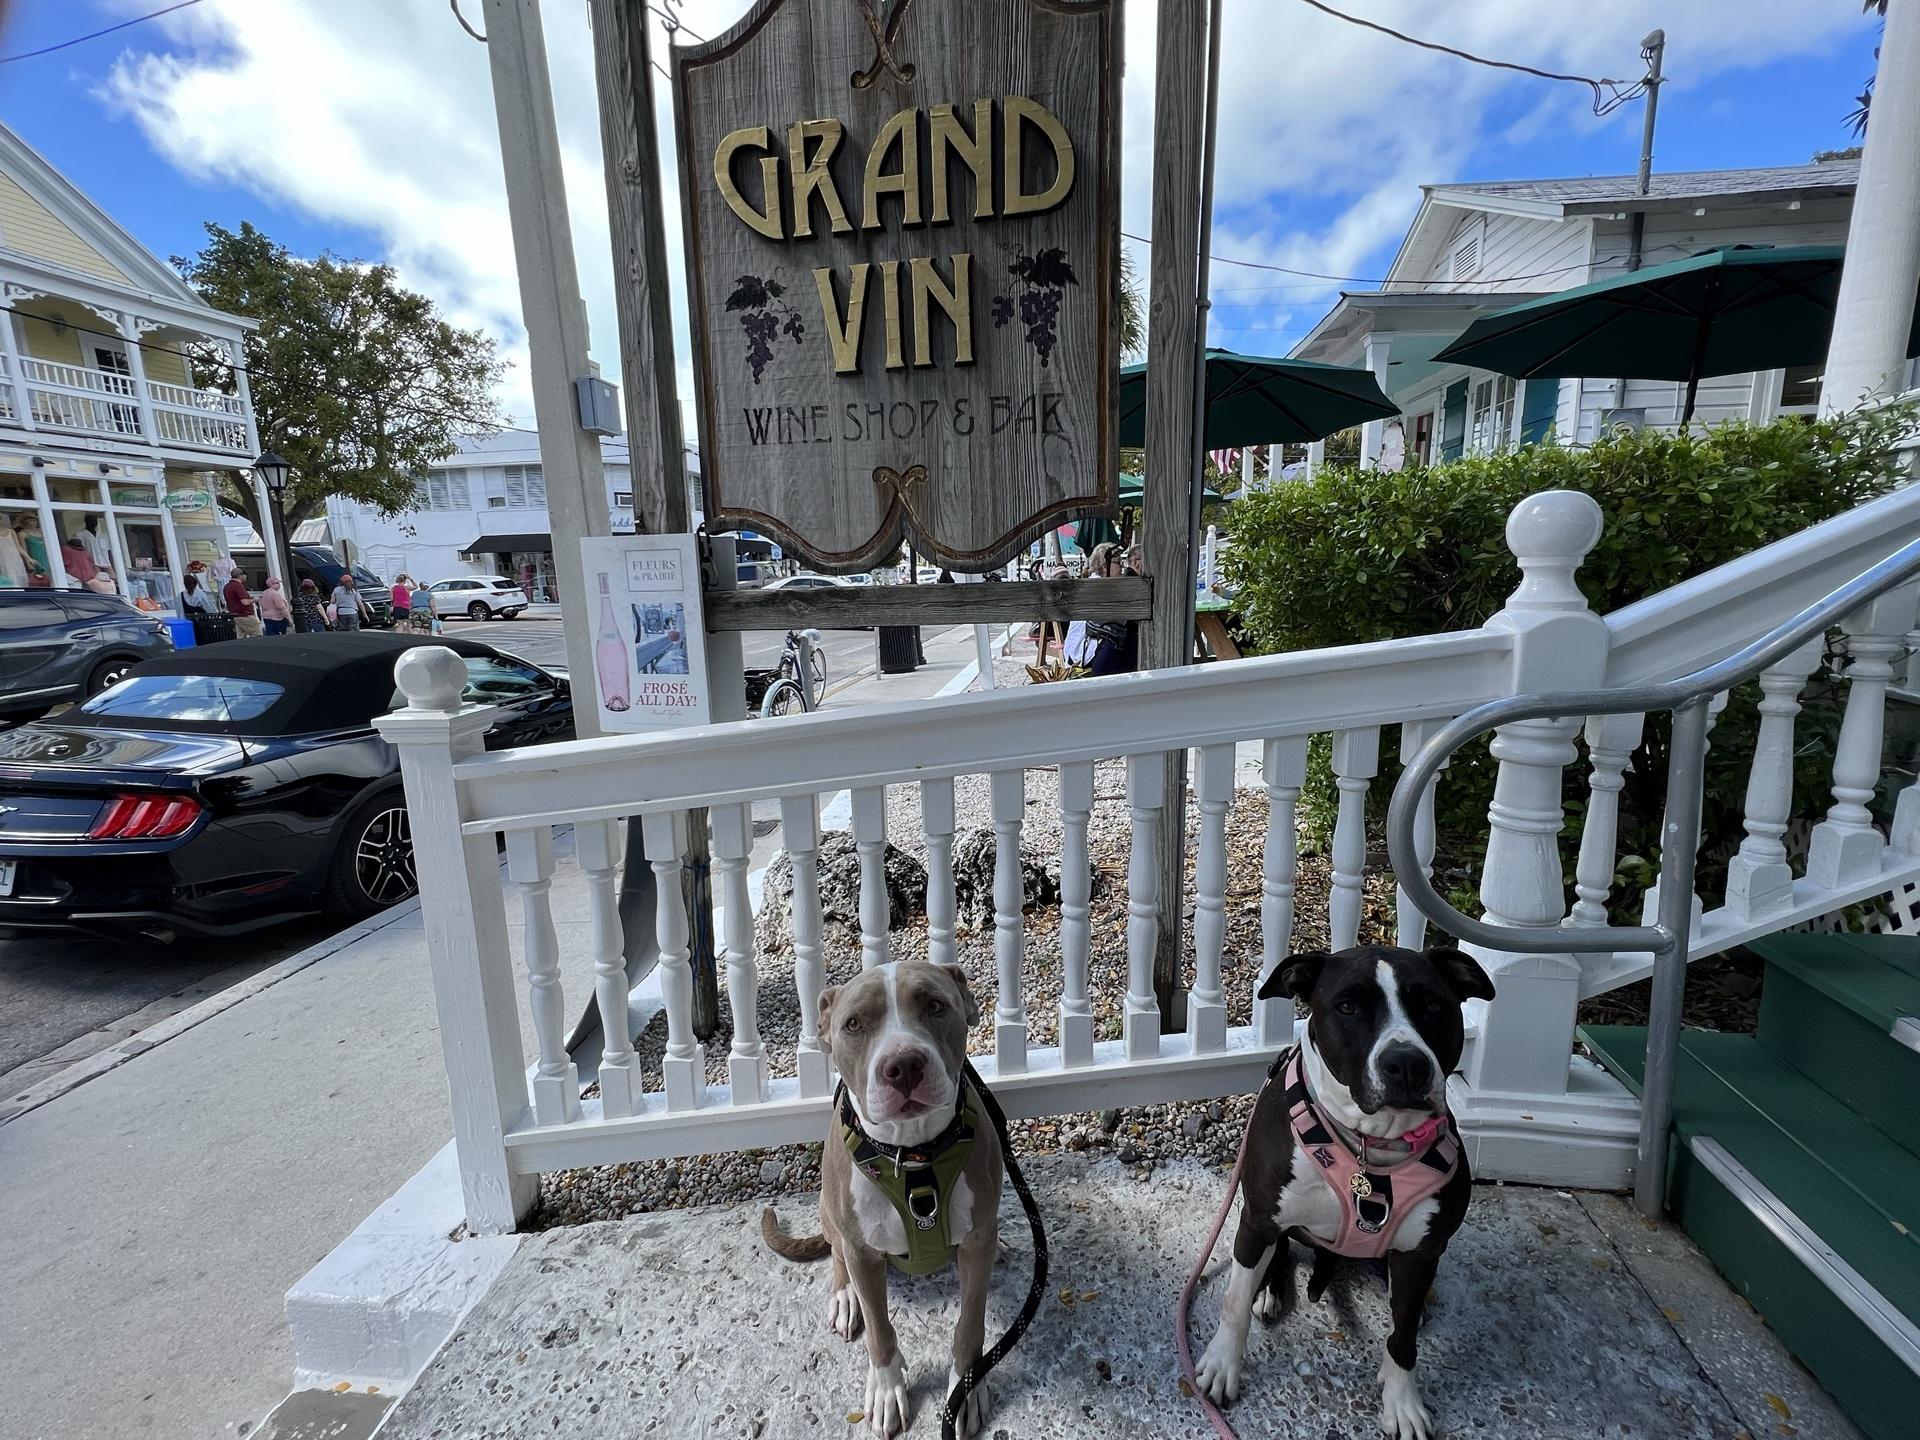 Pet Friendly Grand Vin Wine Bar